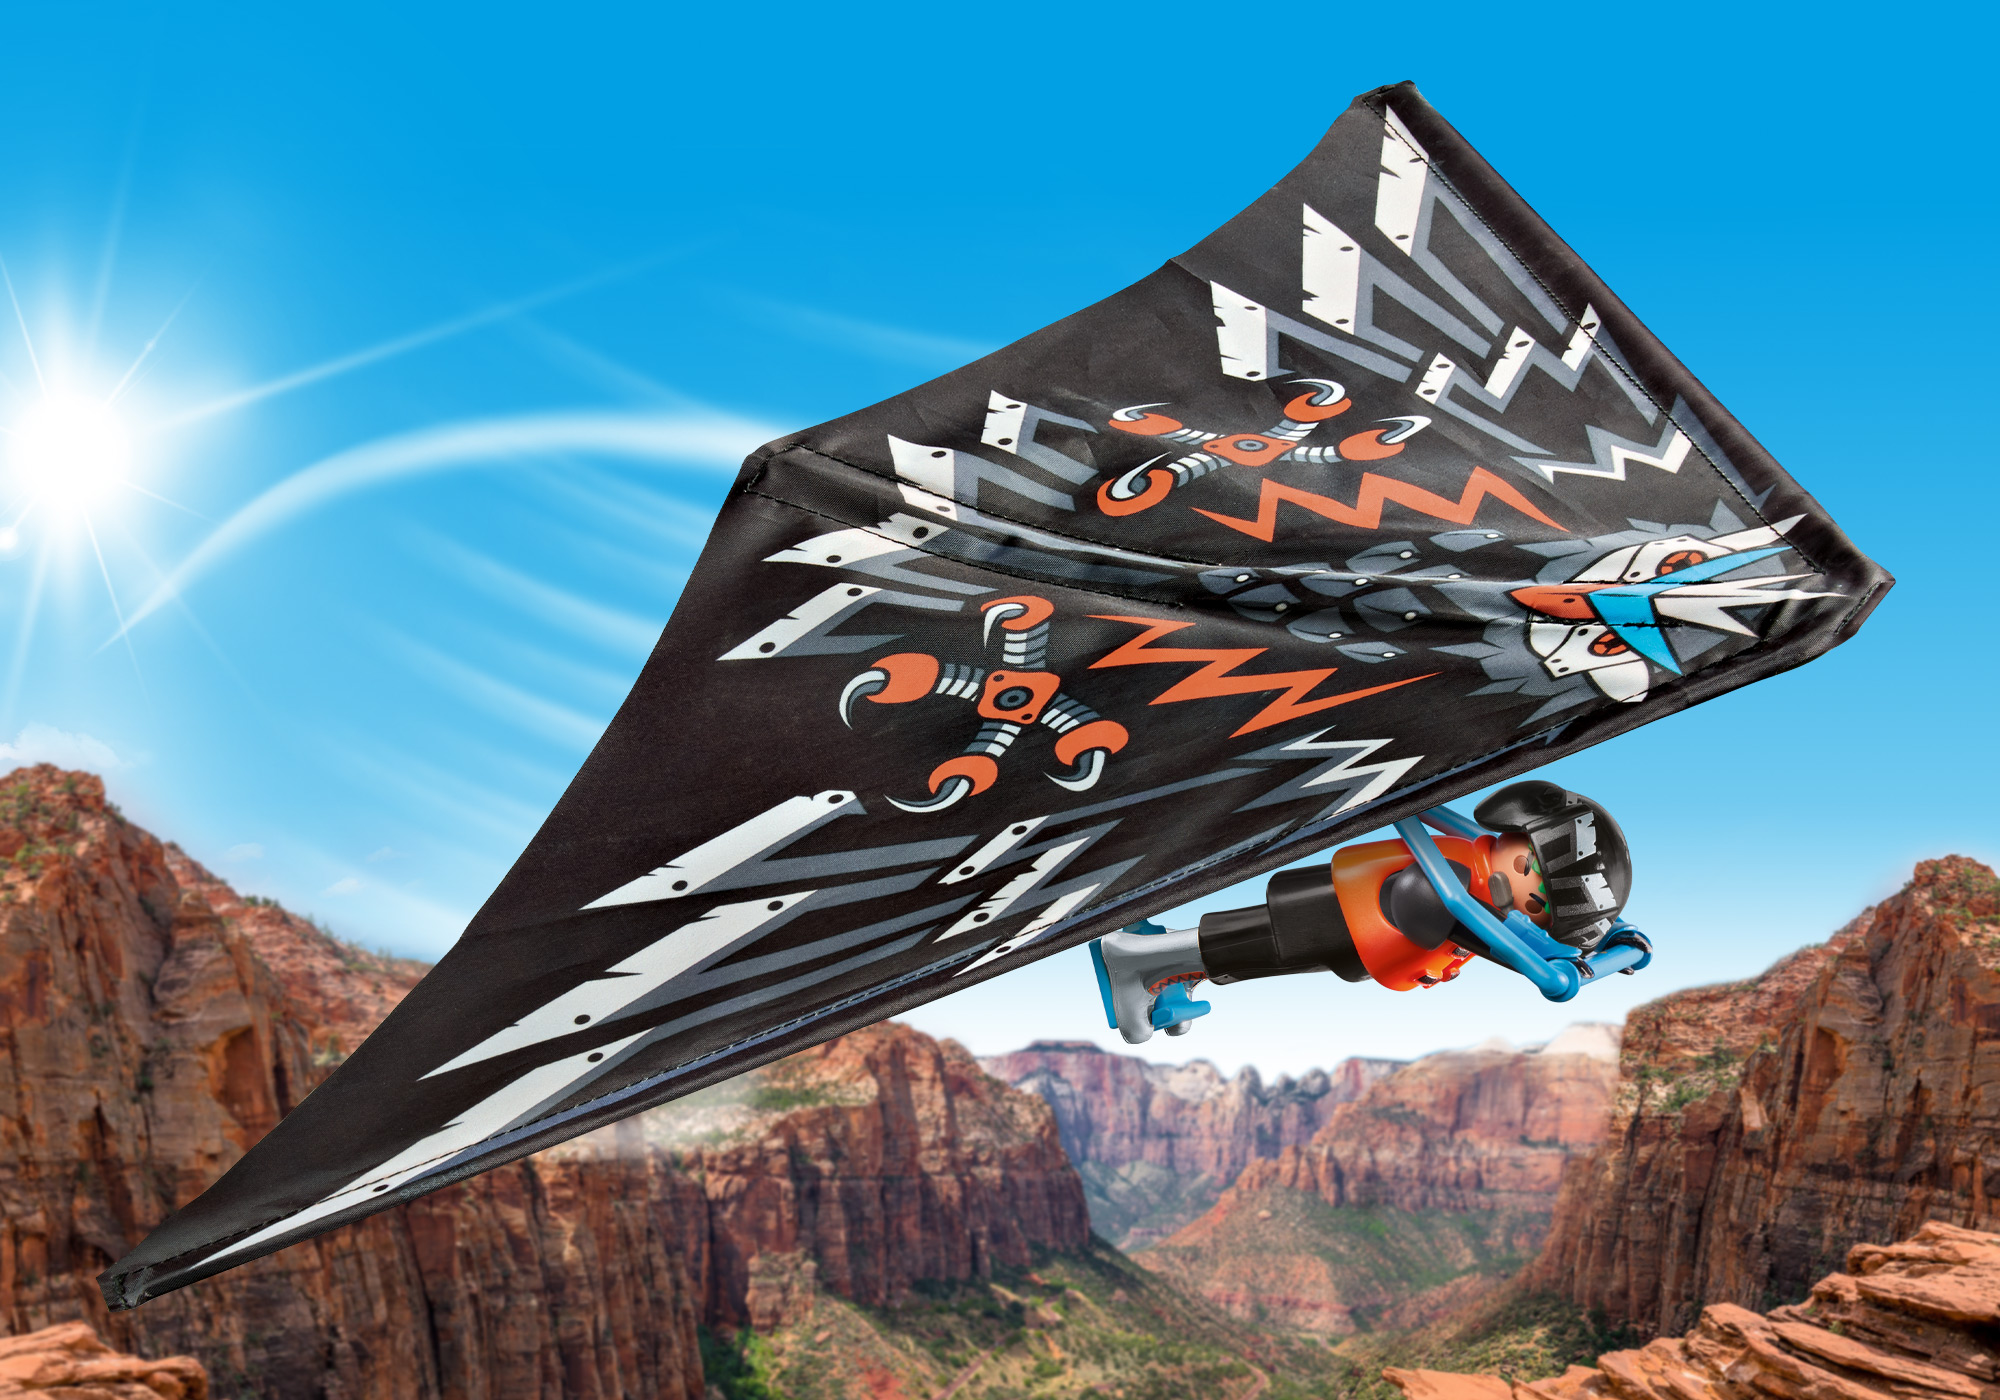 PLAYMOBIL 71079 Pack Spielset, Starter Mehrfarbig Drachenflieger